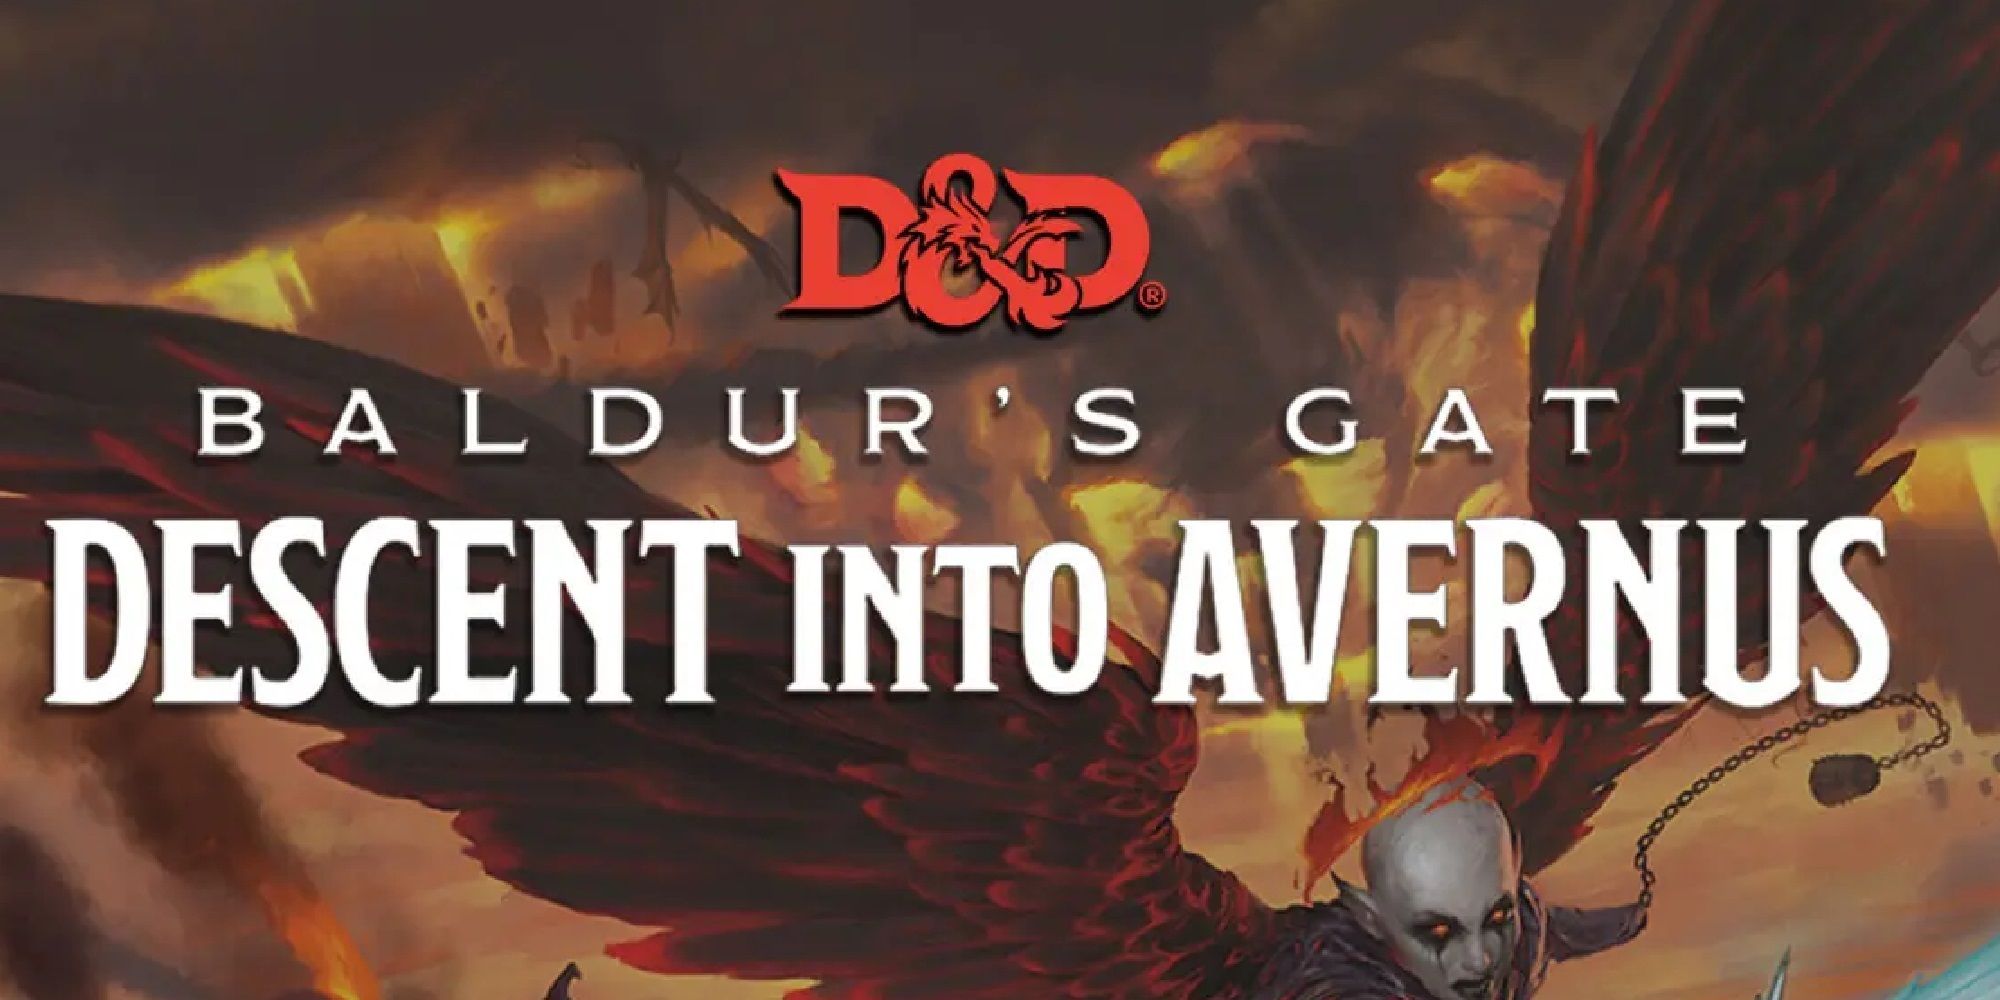 The cover of the Baldur's Gate: Descent into Avernus campaign module for D&D